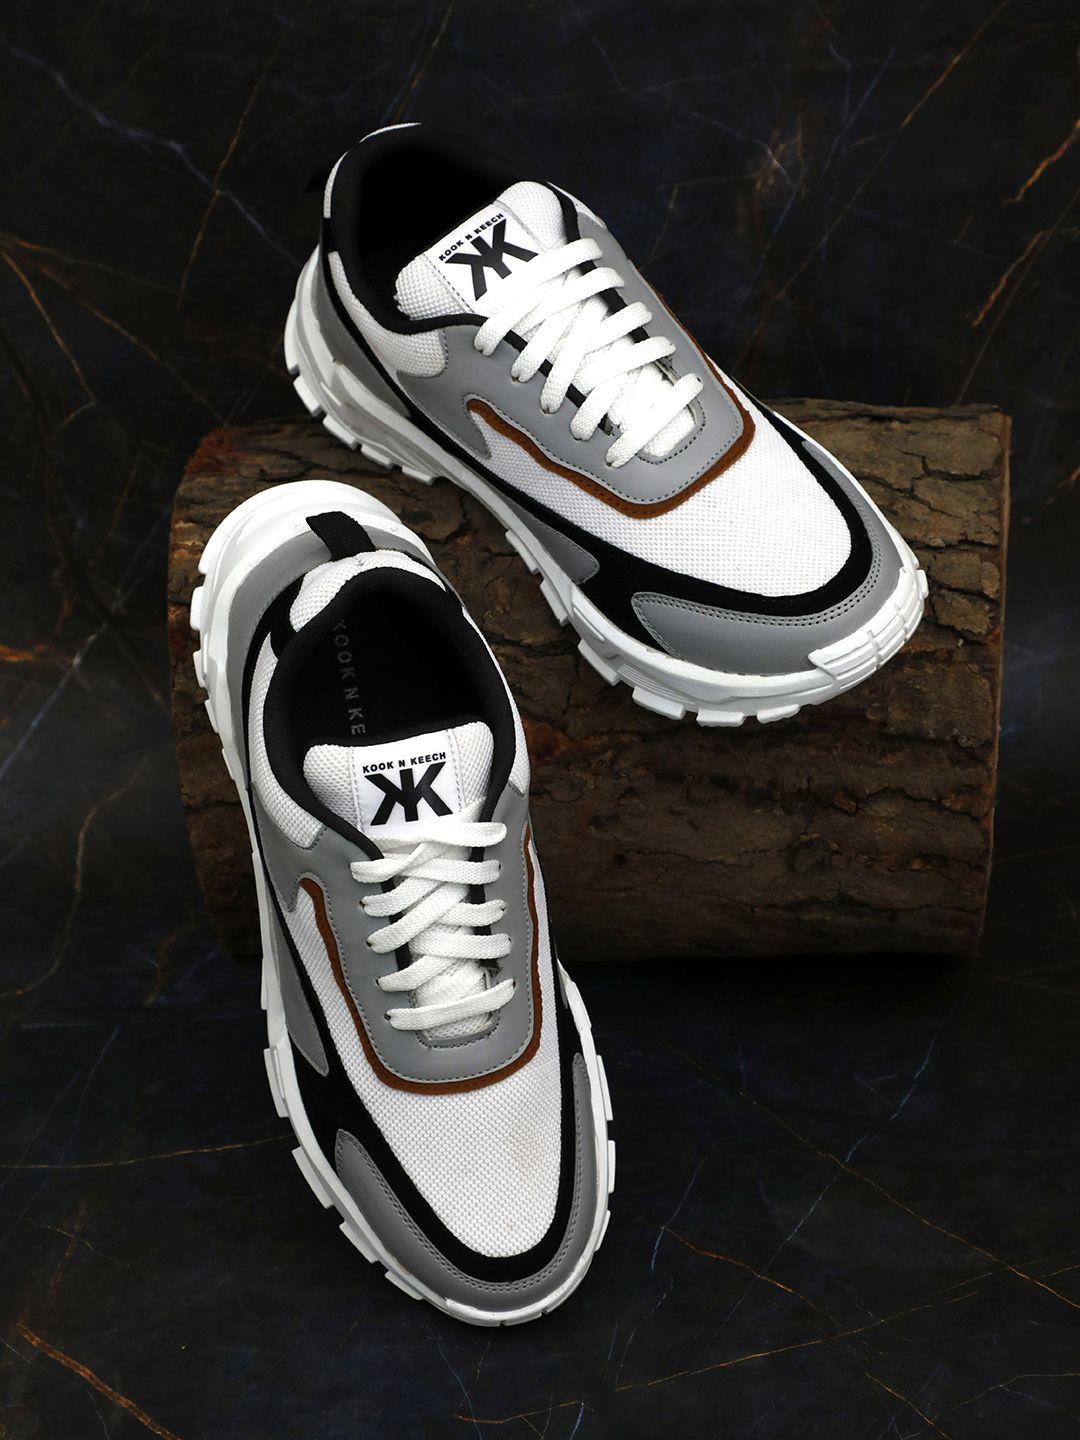 kook n keech men white & grey woven design & colourblocked sneakers